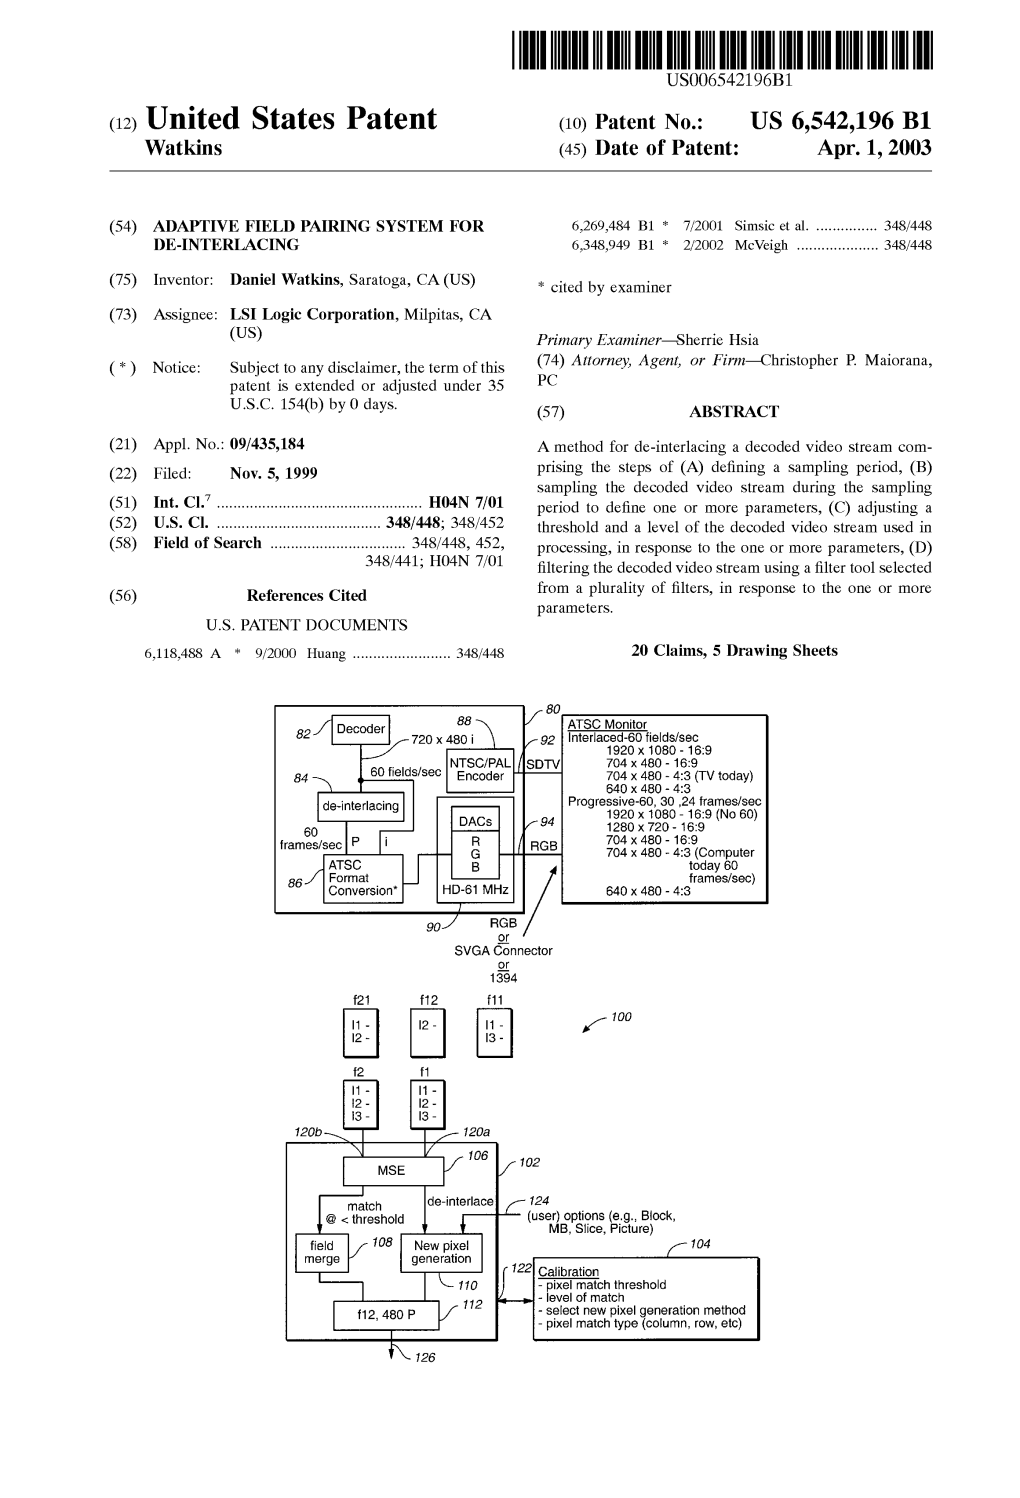 (12) United States Patent (10) Patent No.: US 6,542,196 B1 Watkins (45) Date of Patent: Apr